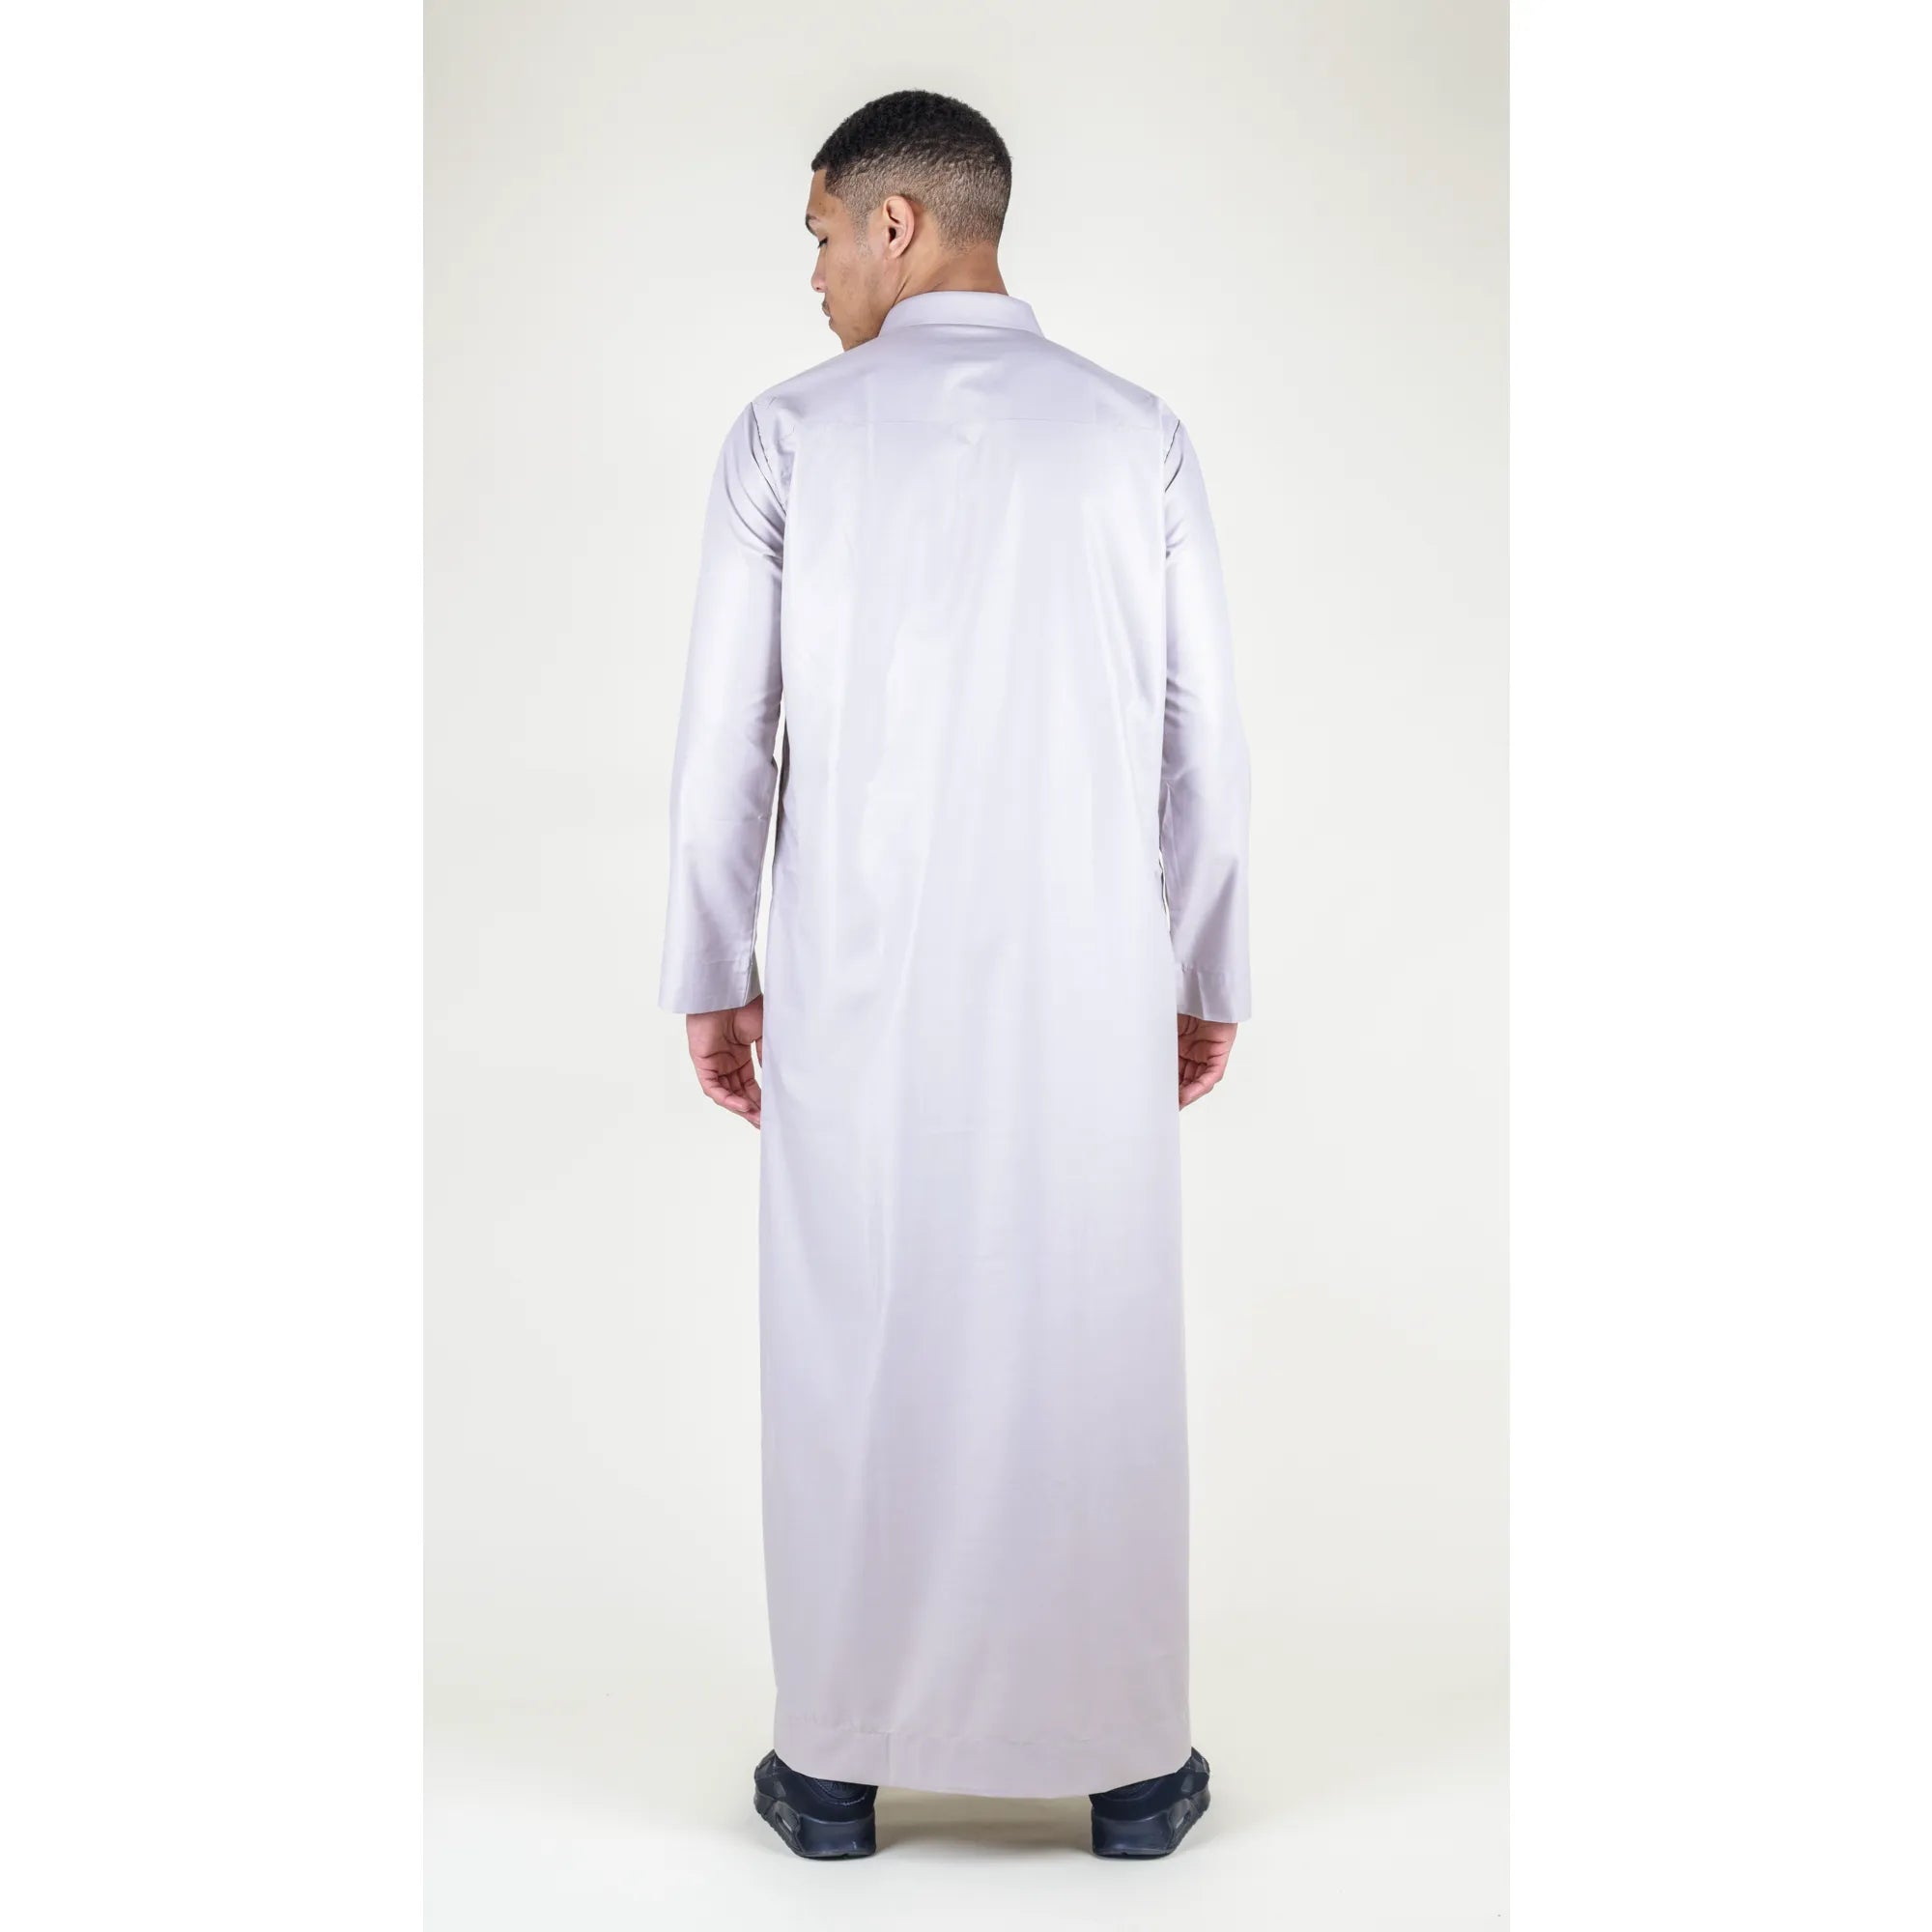 Men's Islamic Clothing | Muslim Abaya Dress Man | Turkey Men's Clothing -  Qamis Man - Aliexpress